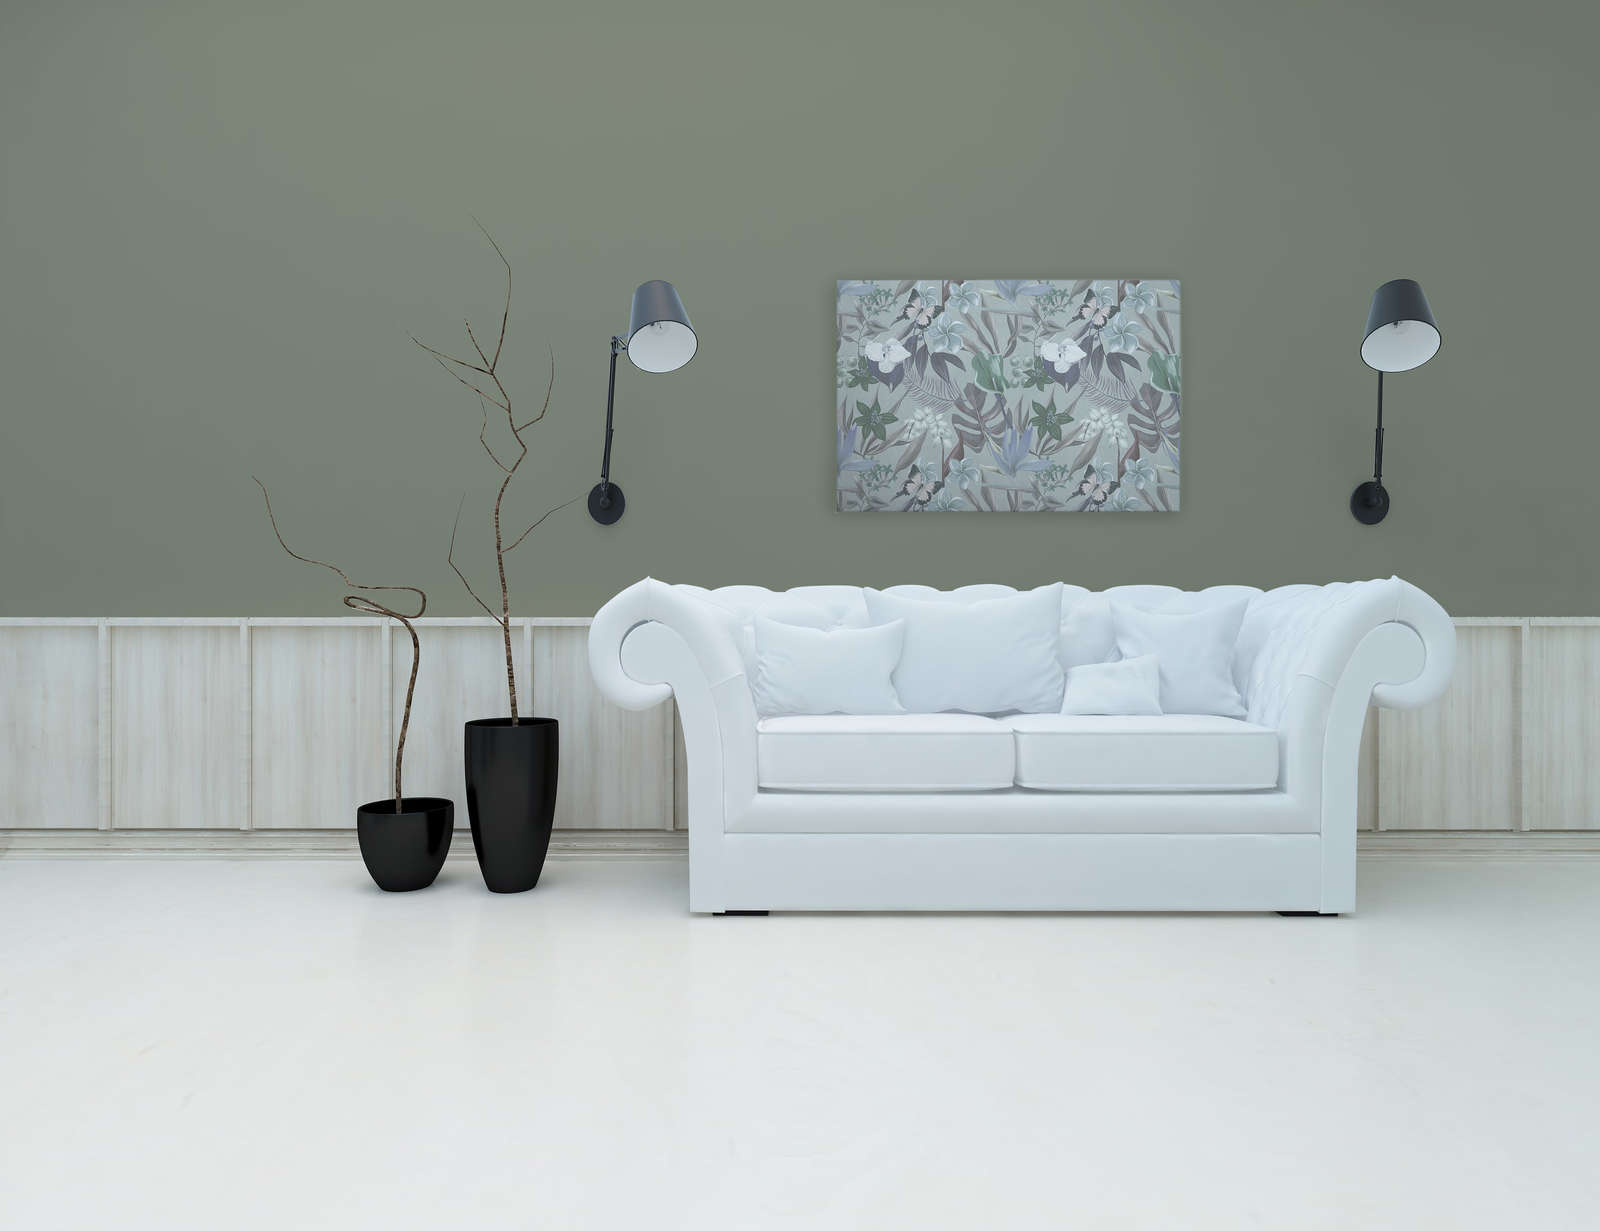             Lienzo Jungla Floral Pintura dibujada | verde, blanco - 0,90 m x 0,60 m
        